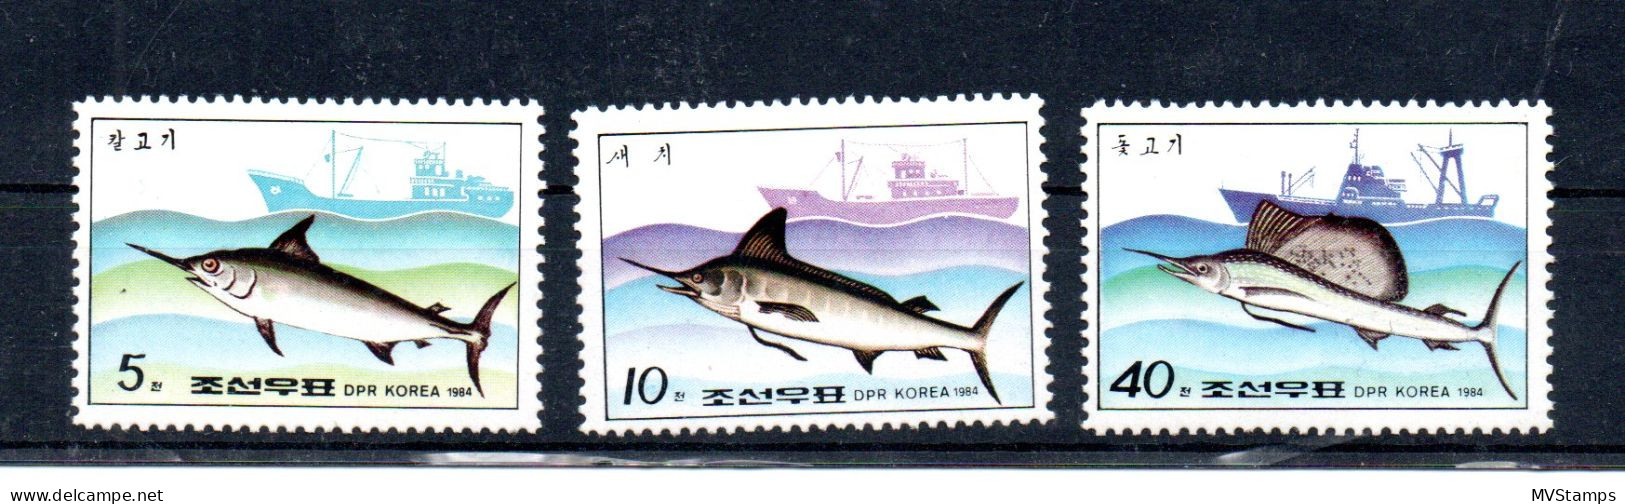 Korea 1984 Set Fish/Fische Stamps (Michel 2486/88) Nice MNH - Korea, North